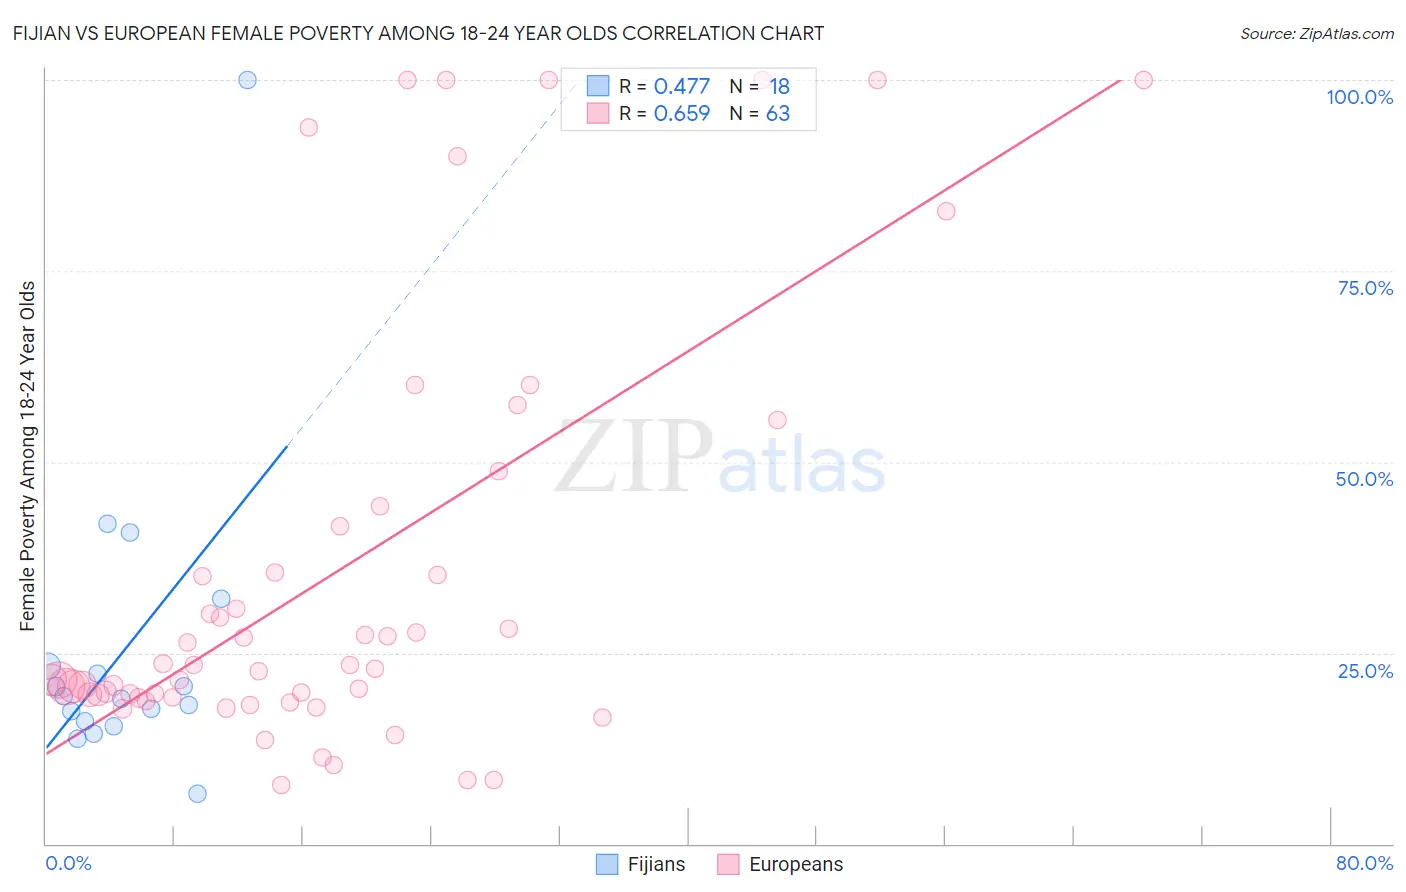 Fijian vs European Female Poverty Among 18-24 Year Olds